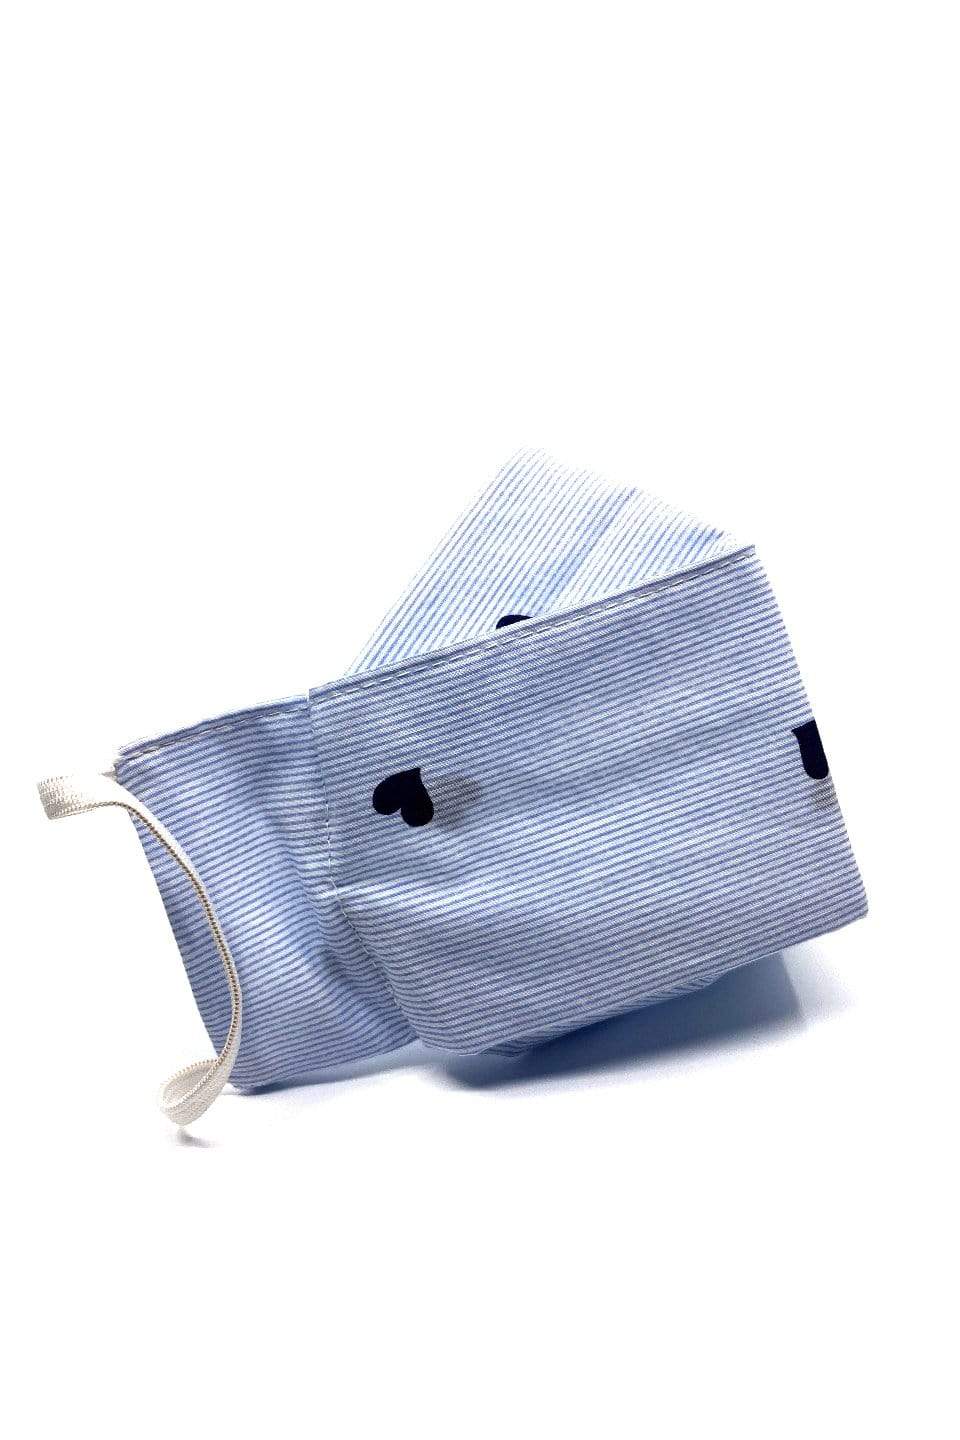 Box Pleated Face Masks Blue Heart Mini Stripes (Box Pleated Mask with Filter Pocket) - Chloe Dao